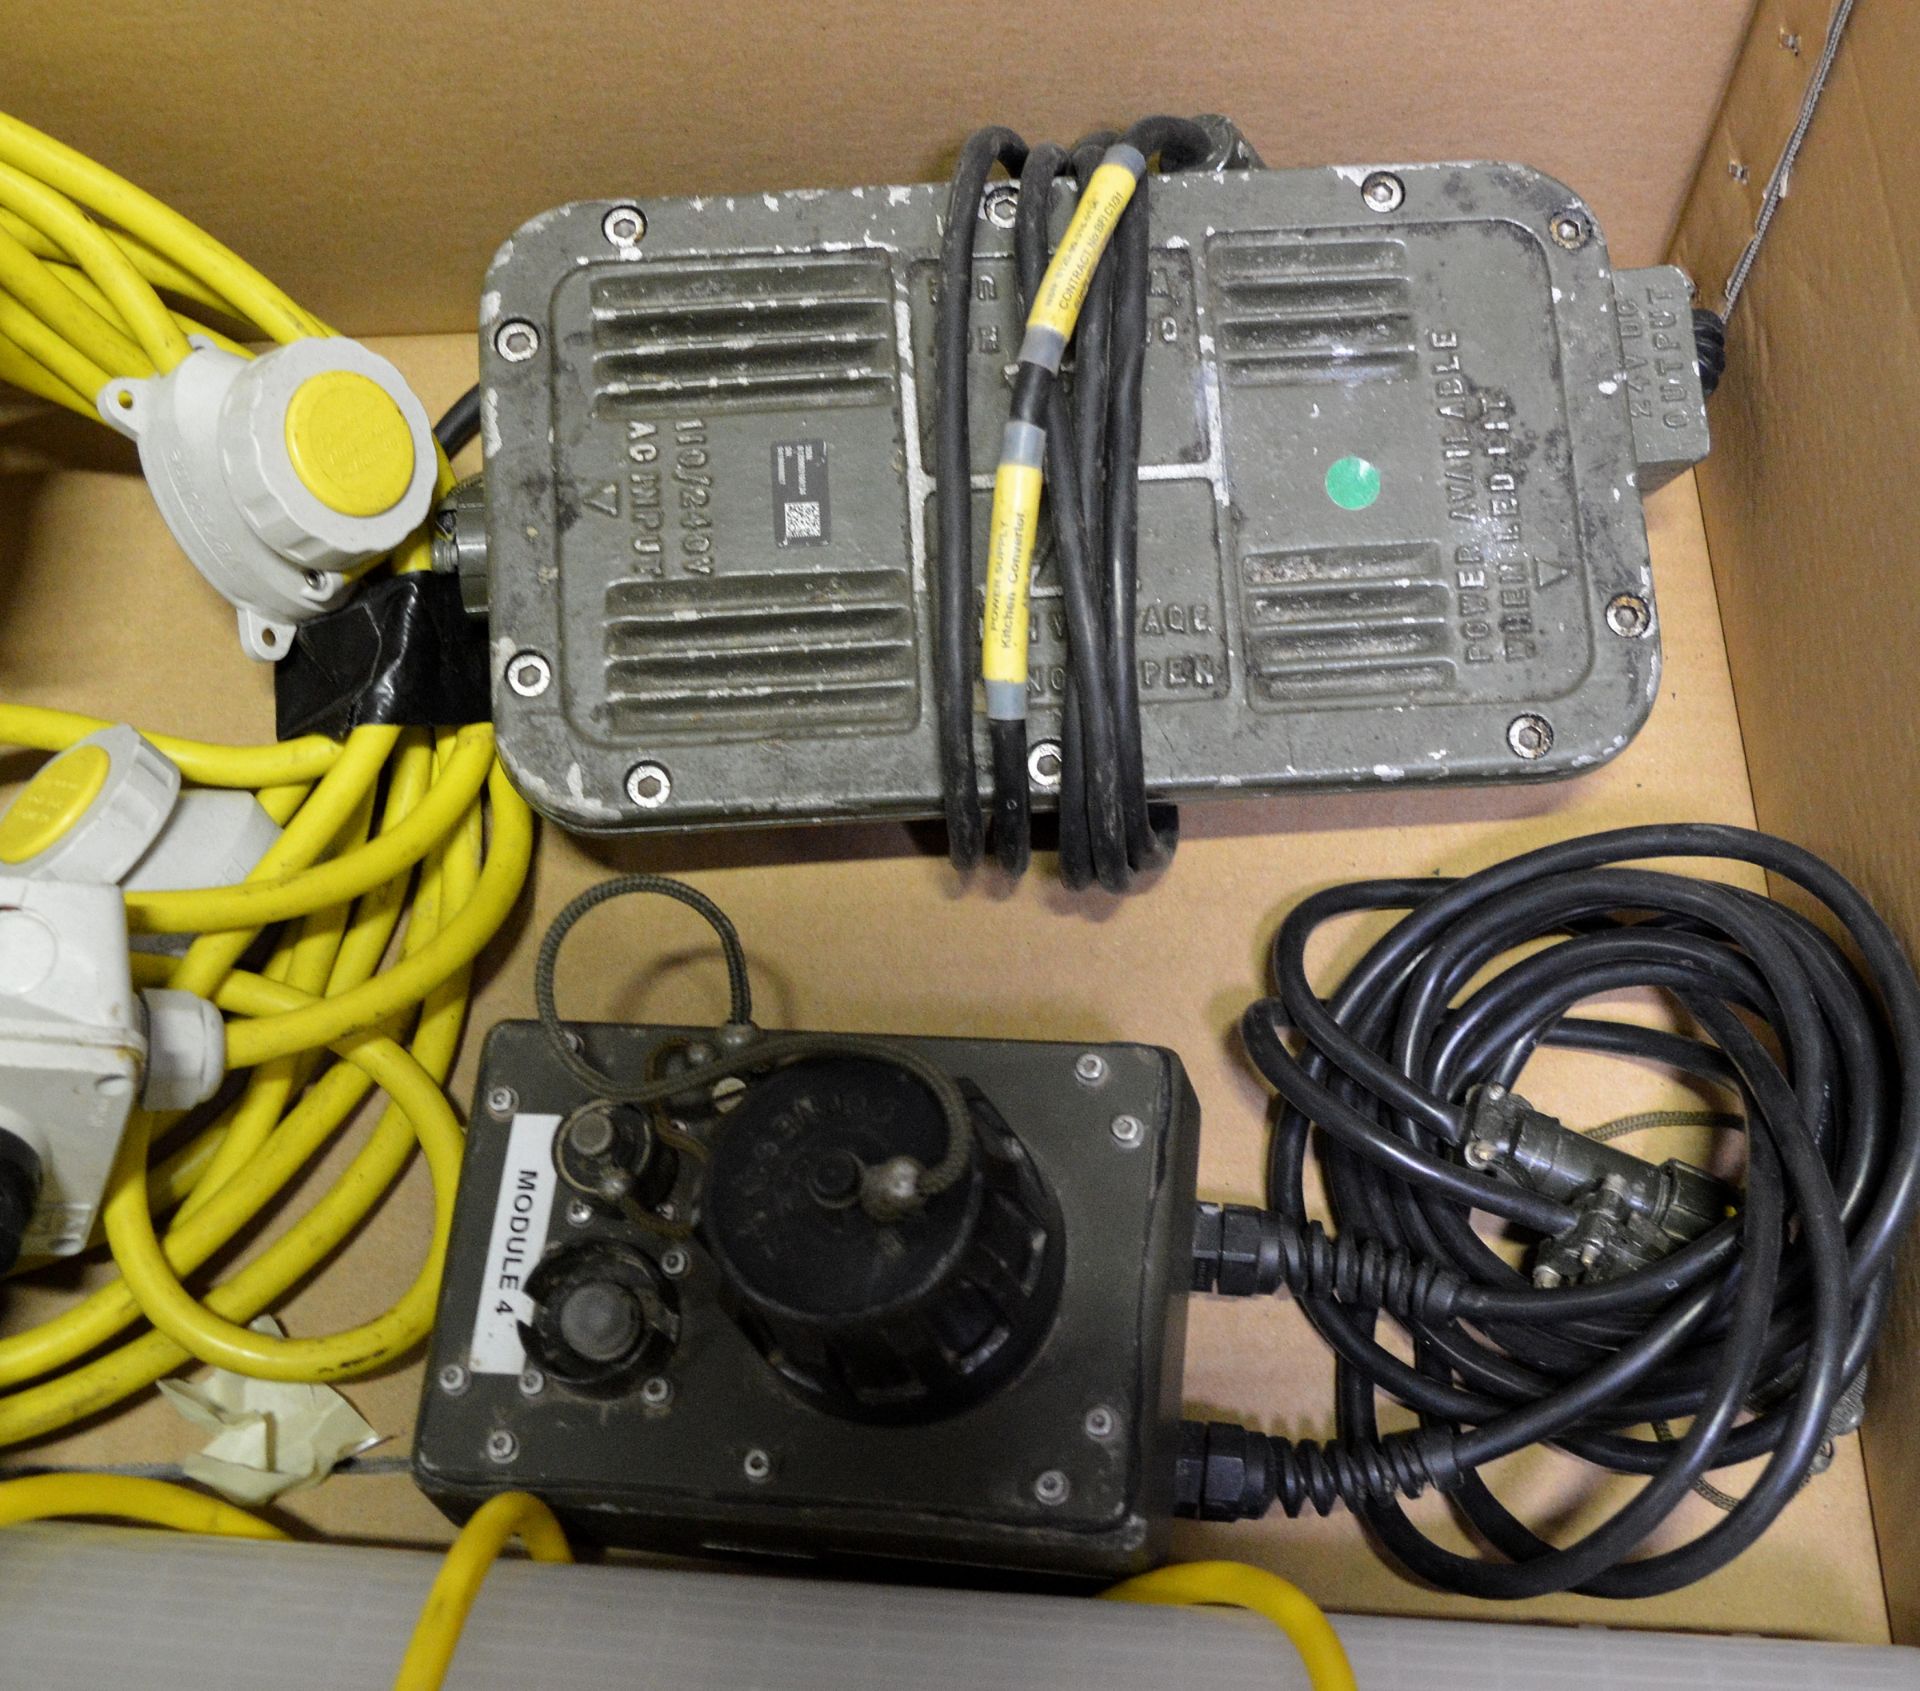 Various Electrical Equipment - Lights, 240v & 110V Distribution Boxes, Leads - Image 4 of 4